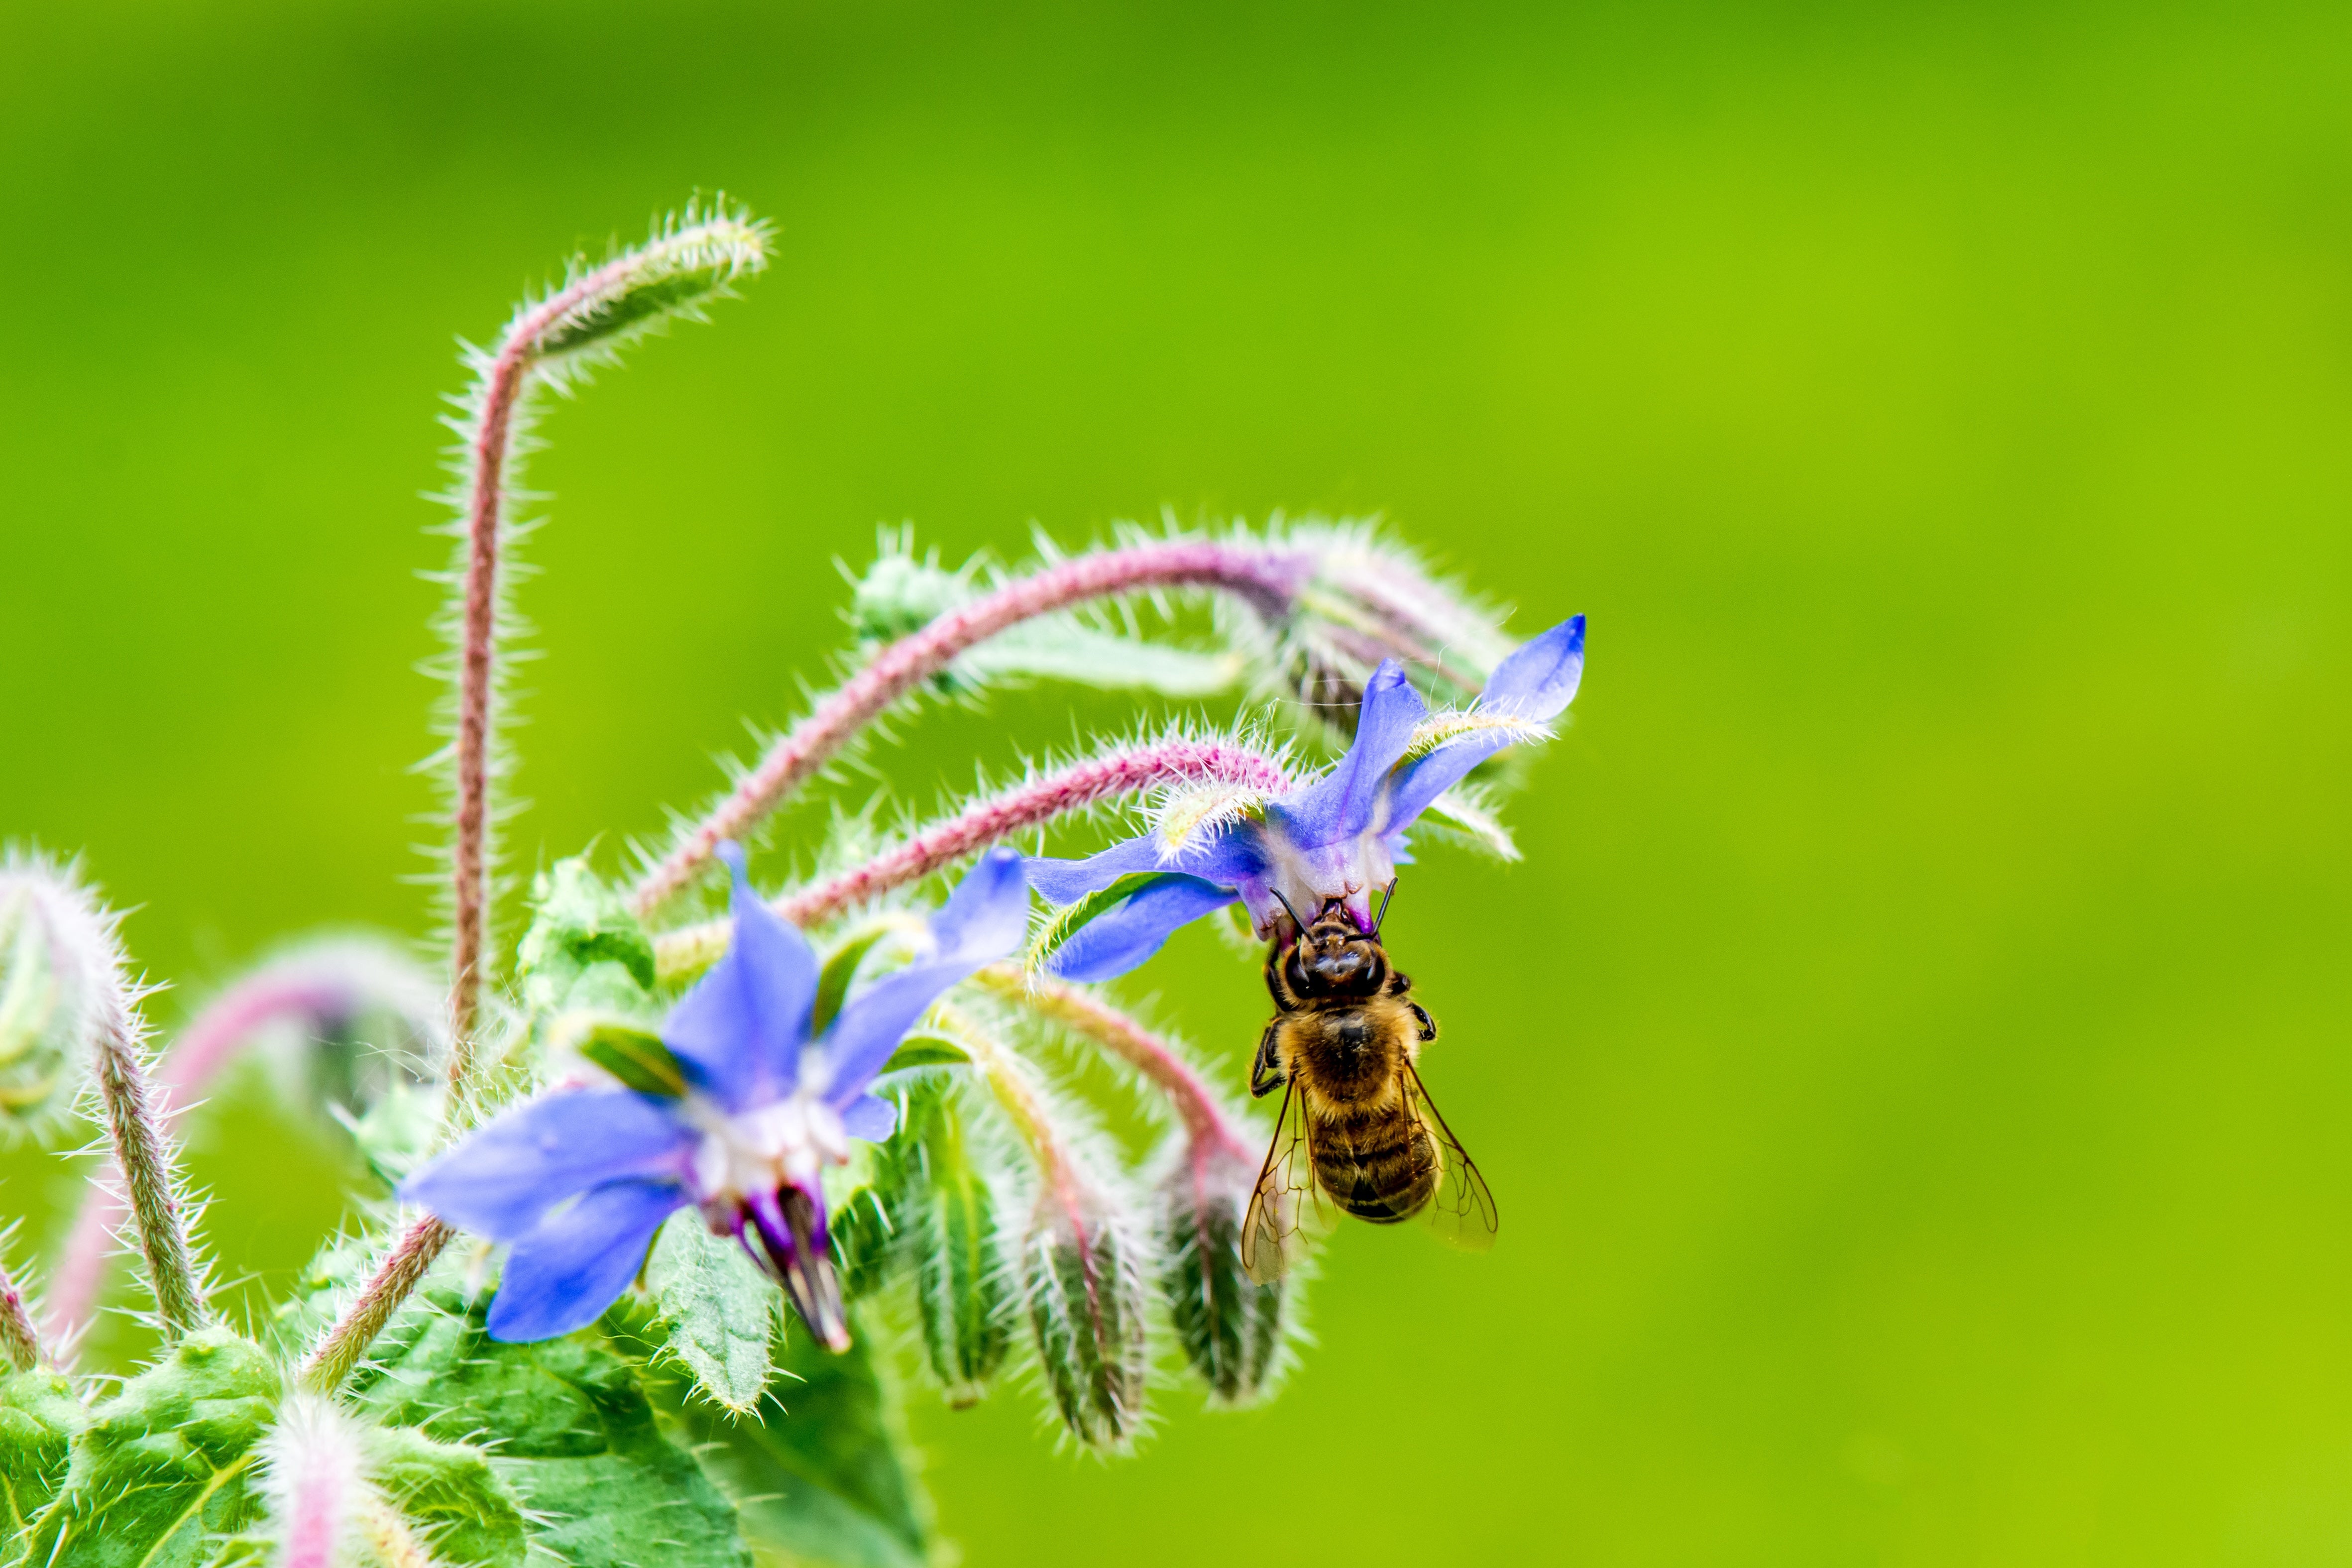 I love pollinators and so should you!